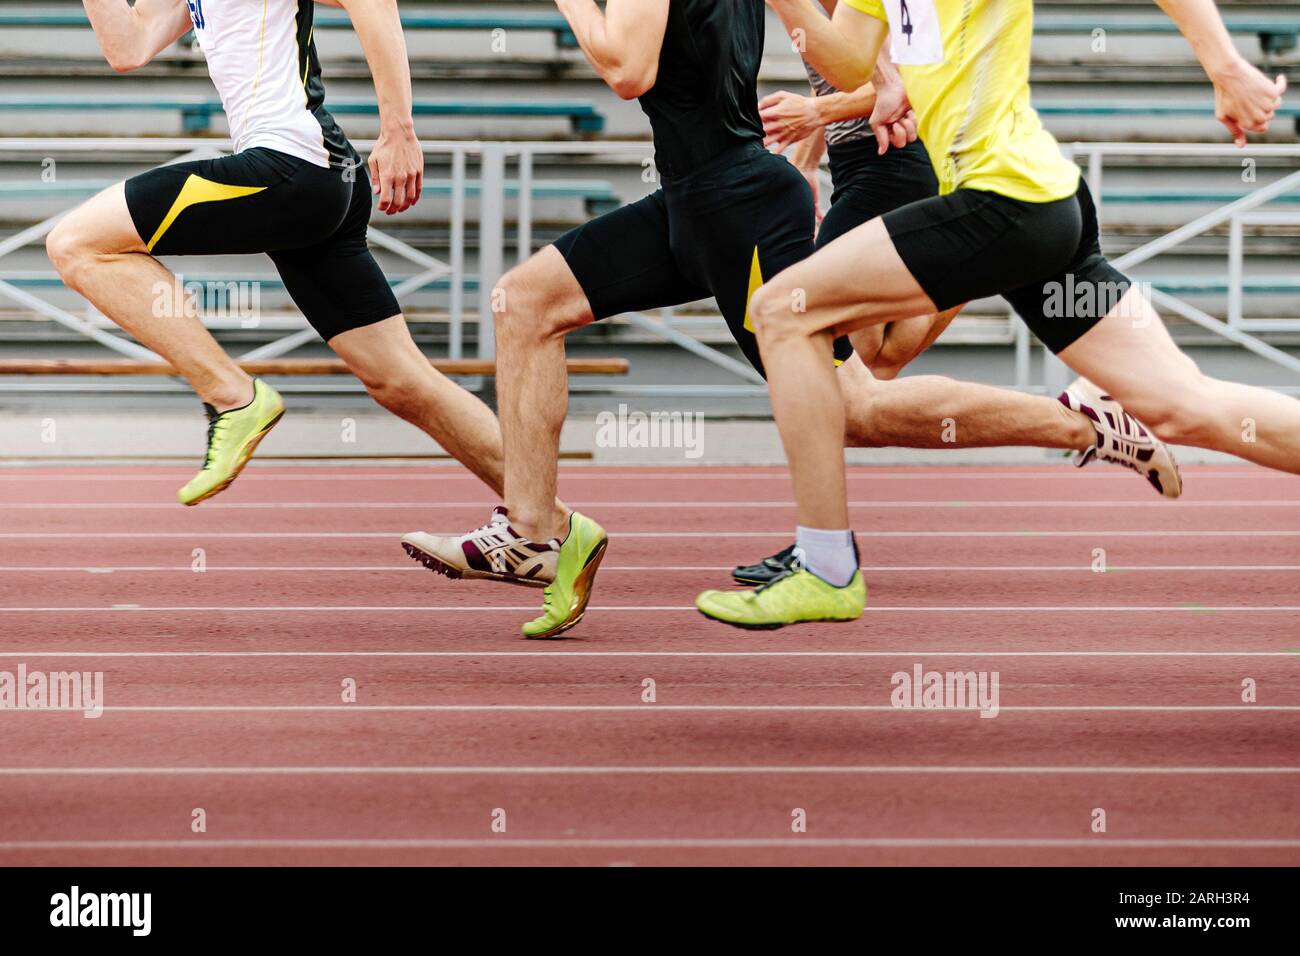 legs men athletes runners running race sprint in athletics Stock Photo